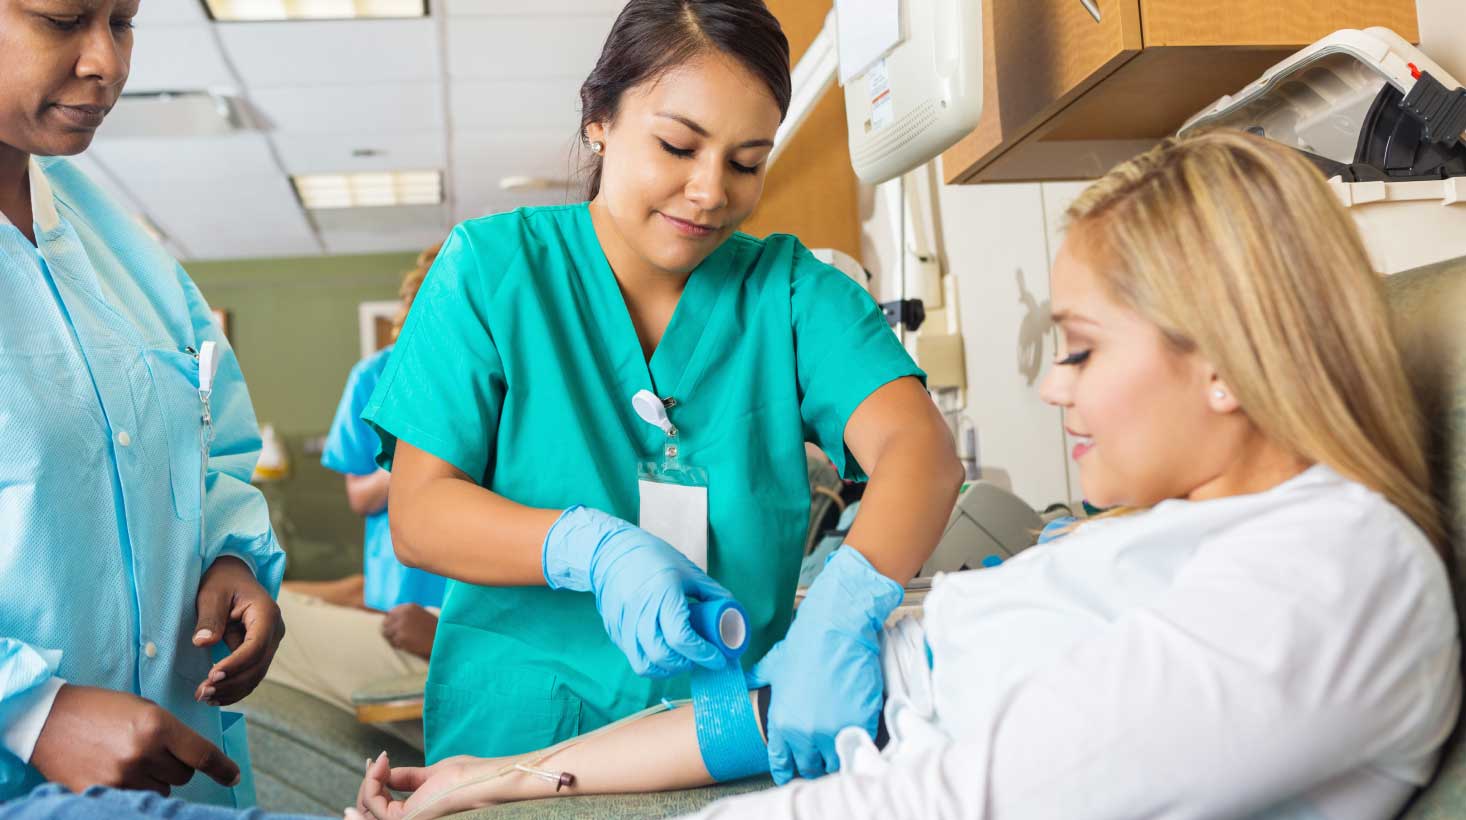 Nurse installing an IV